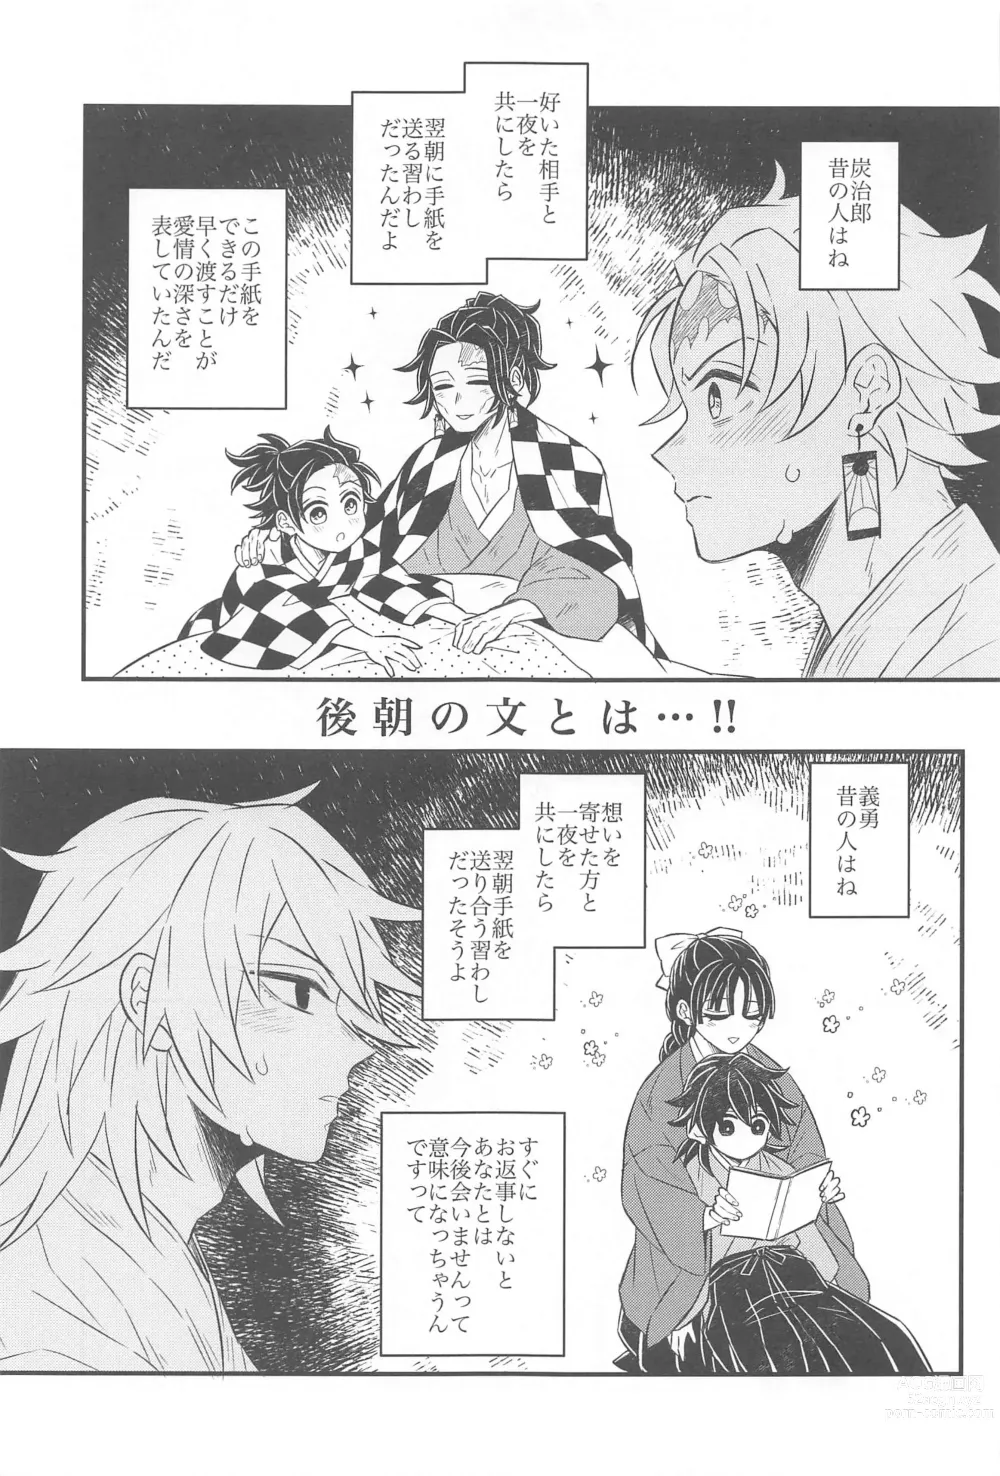 Page 12 of doujinshi Shoya no Yokuasa - the morning after the first night